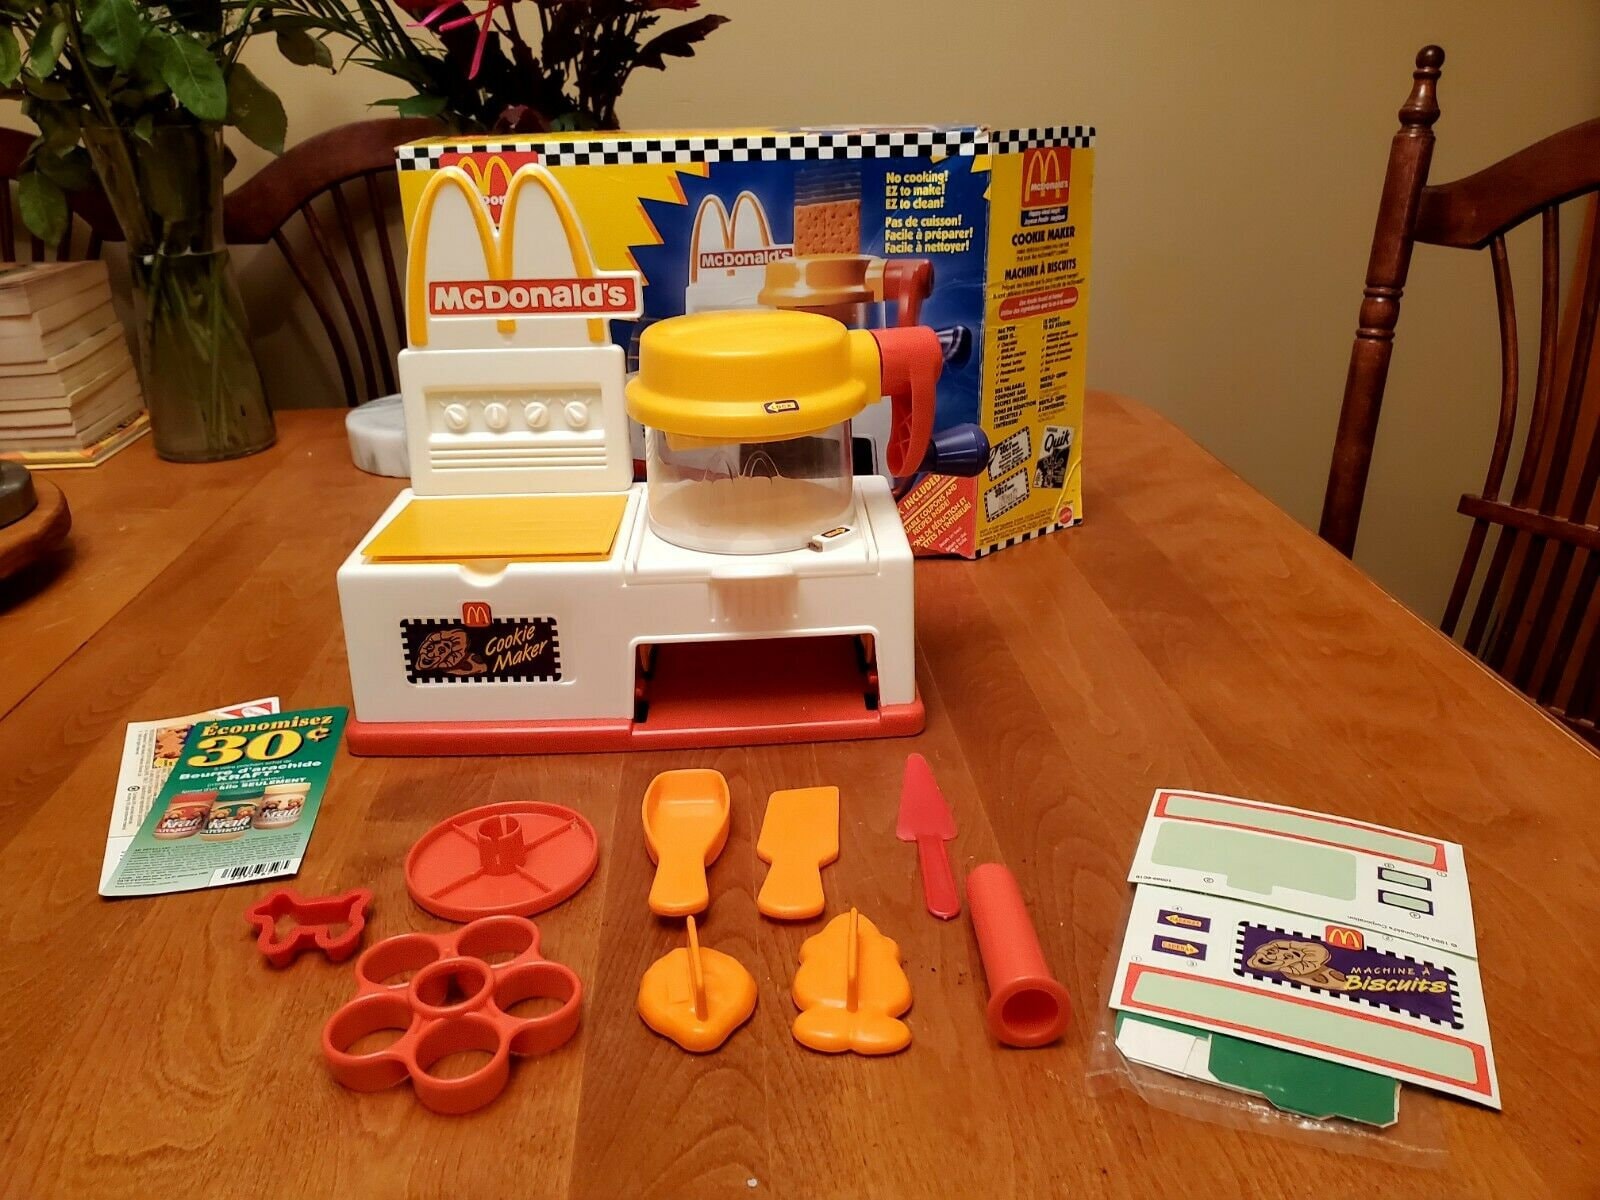 McDonald's Happy Meal Magic 1993 Cookie Maker Set - Making Cookies! 